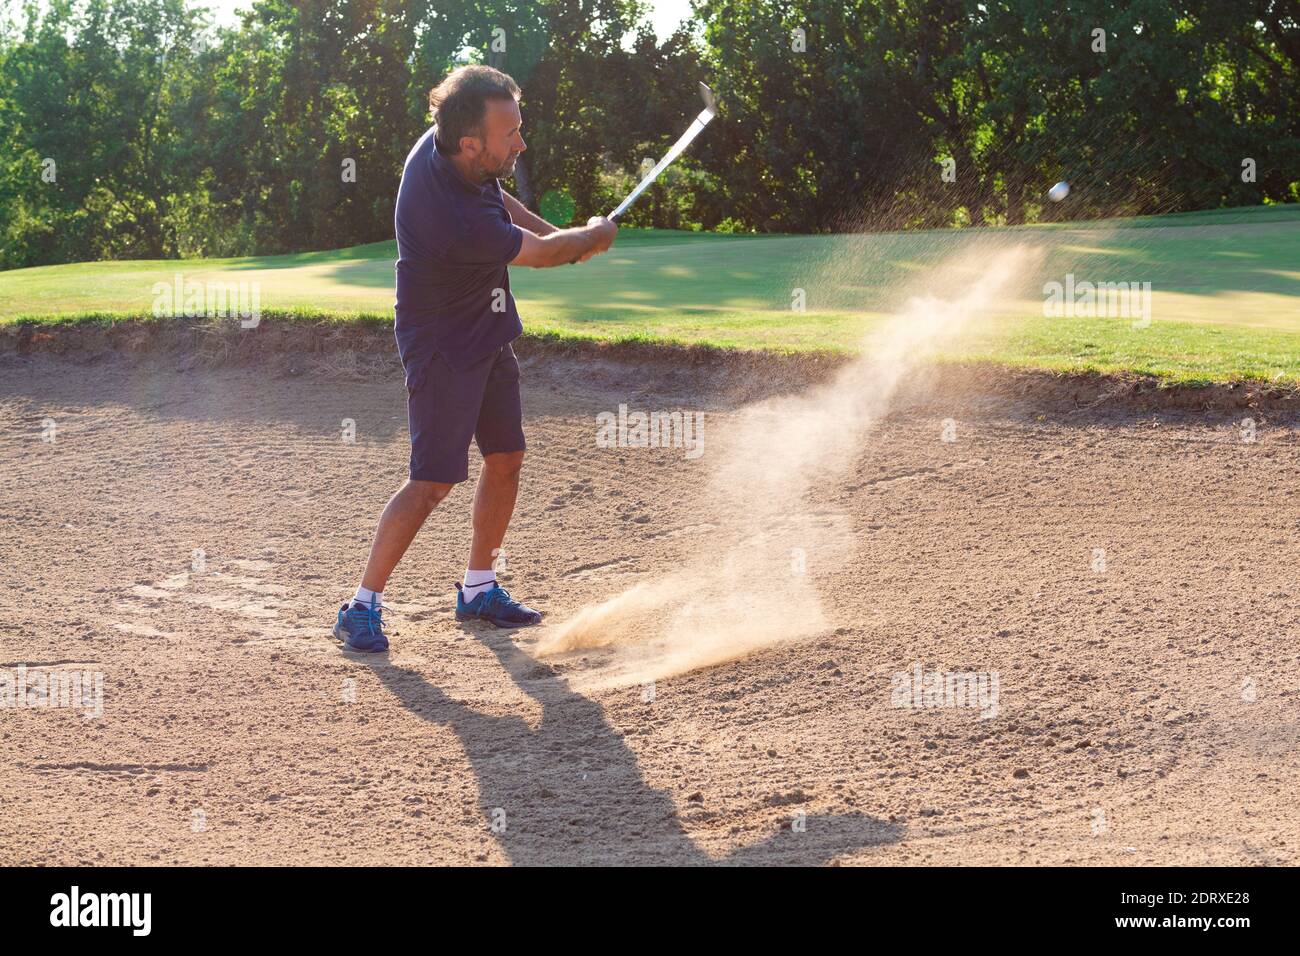 Hombre Golfista Toma un Disparo en el Bunker - Juega Golf en el Bunker Foto de stock